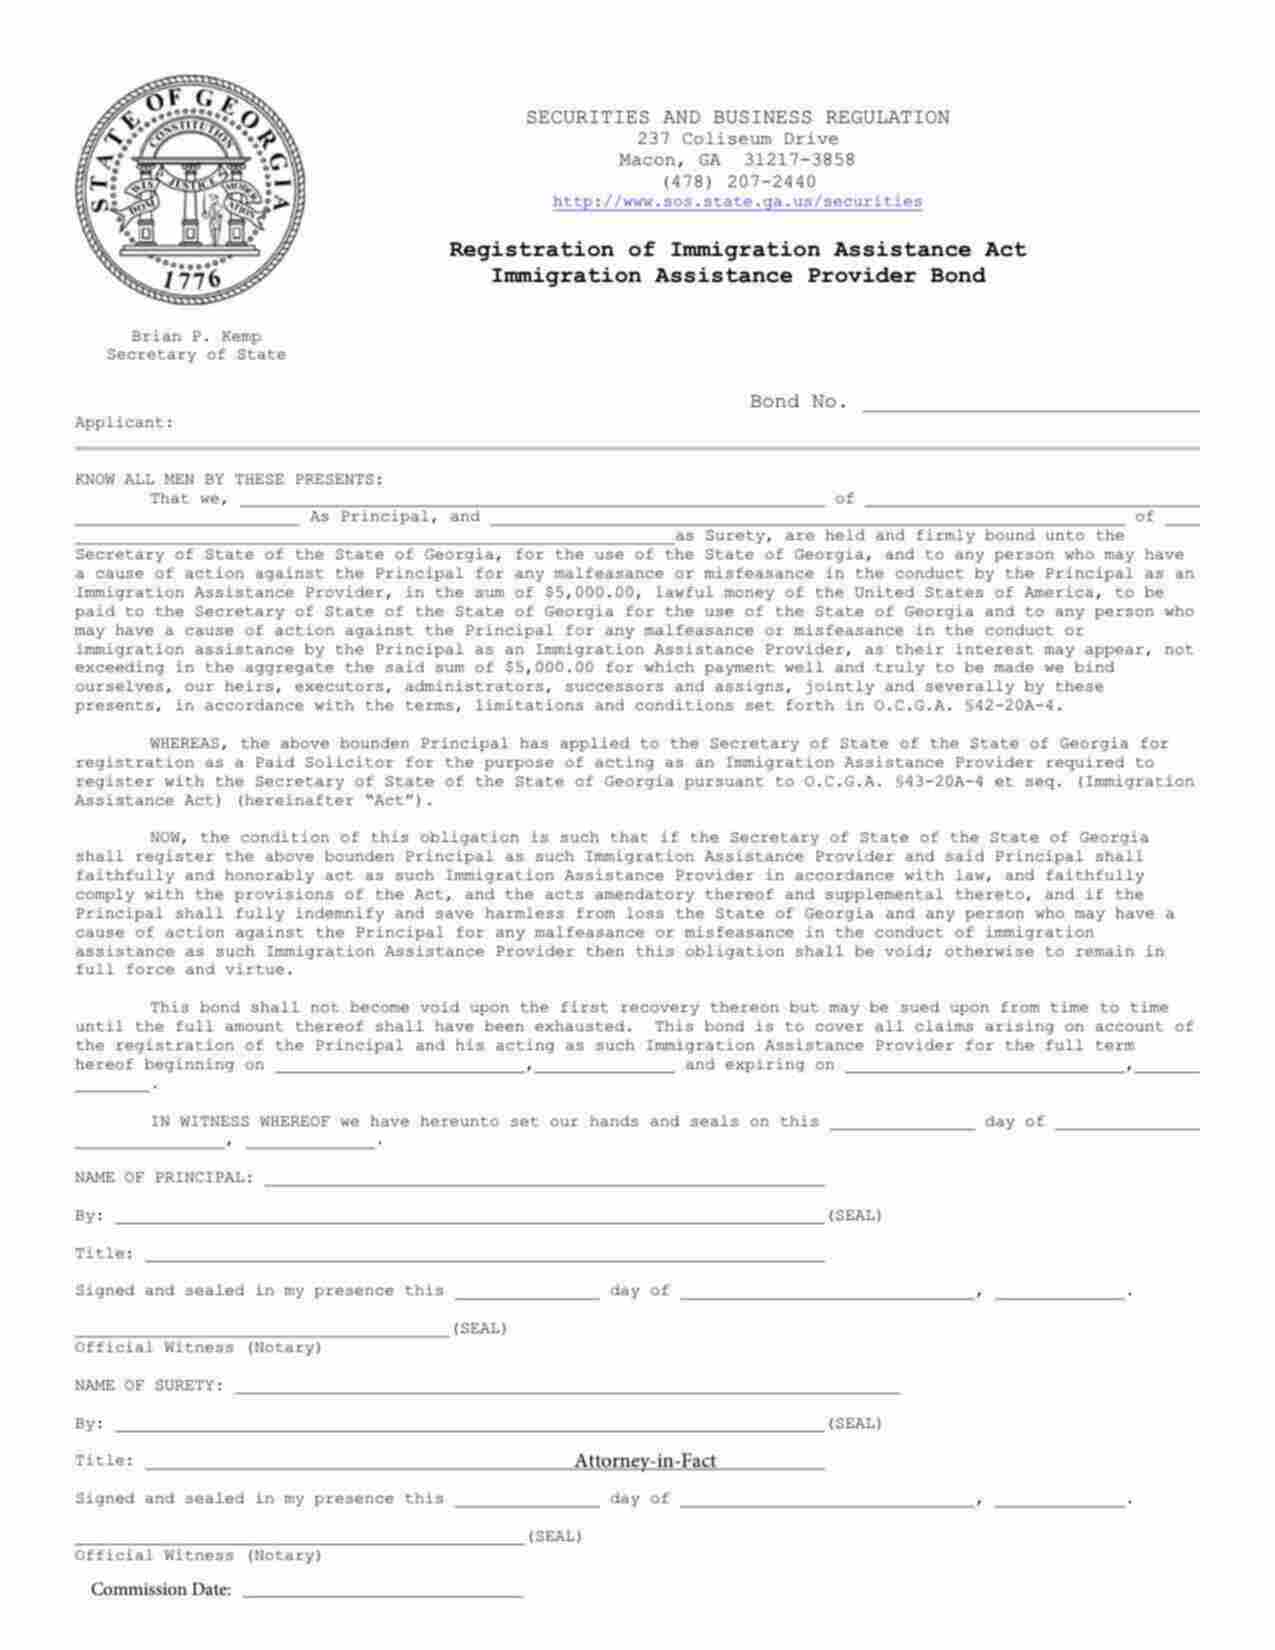 Georgia Immigration Assistance Provider Bond Form